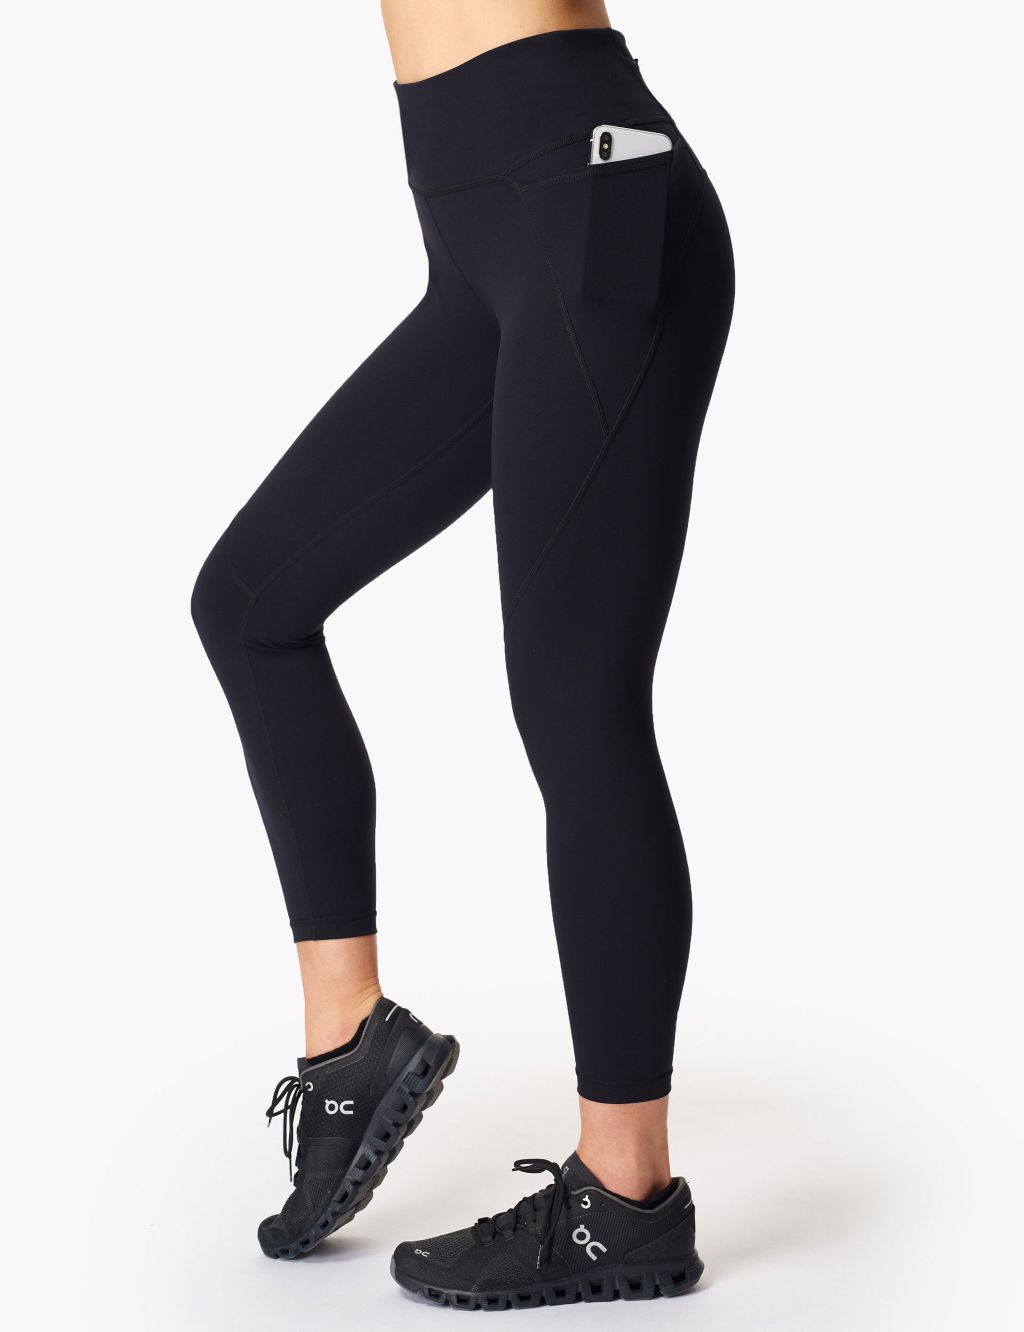 NEW Adidas Girls Black Floral Flower Printed Athletic Leggings Logo LARGE  14